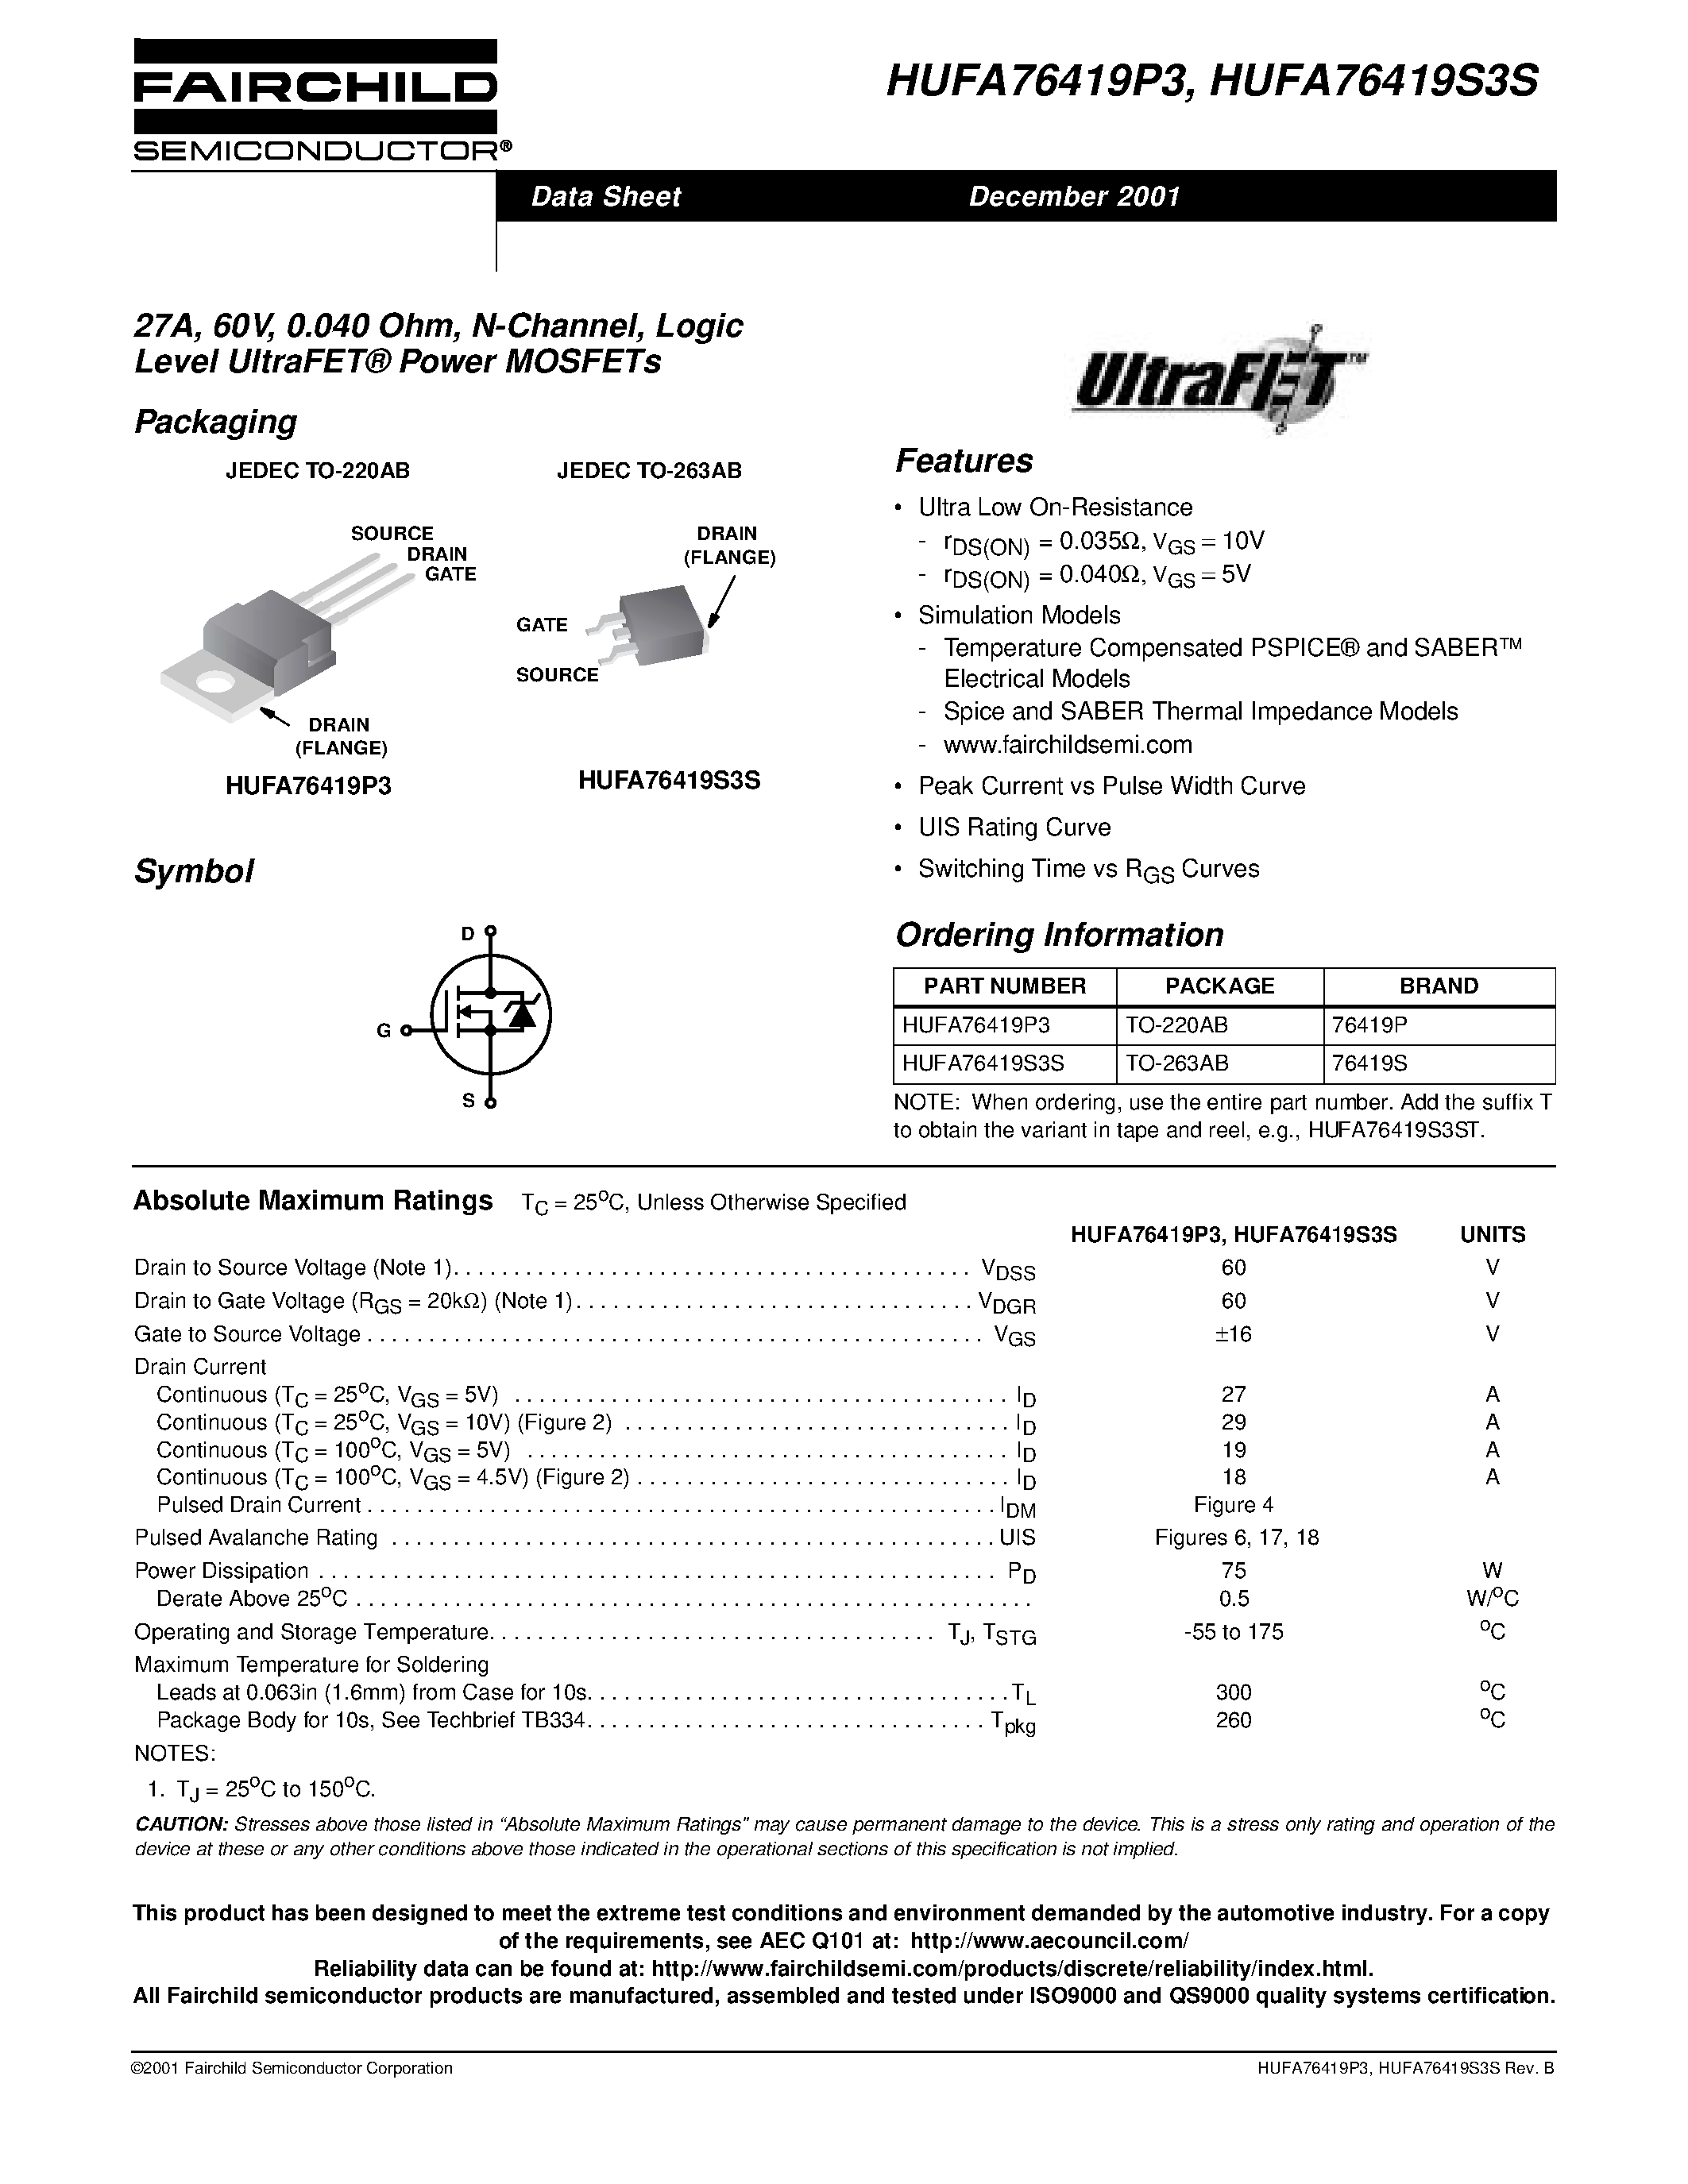 Даташит HUFA76419S3S - 27A/ 60V/ 0.040 Ohm/ N-Channel/ Logic Level UltraFET Power MOSFETs страница 1